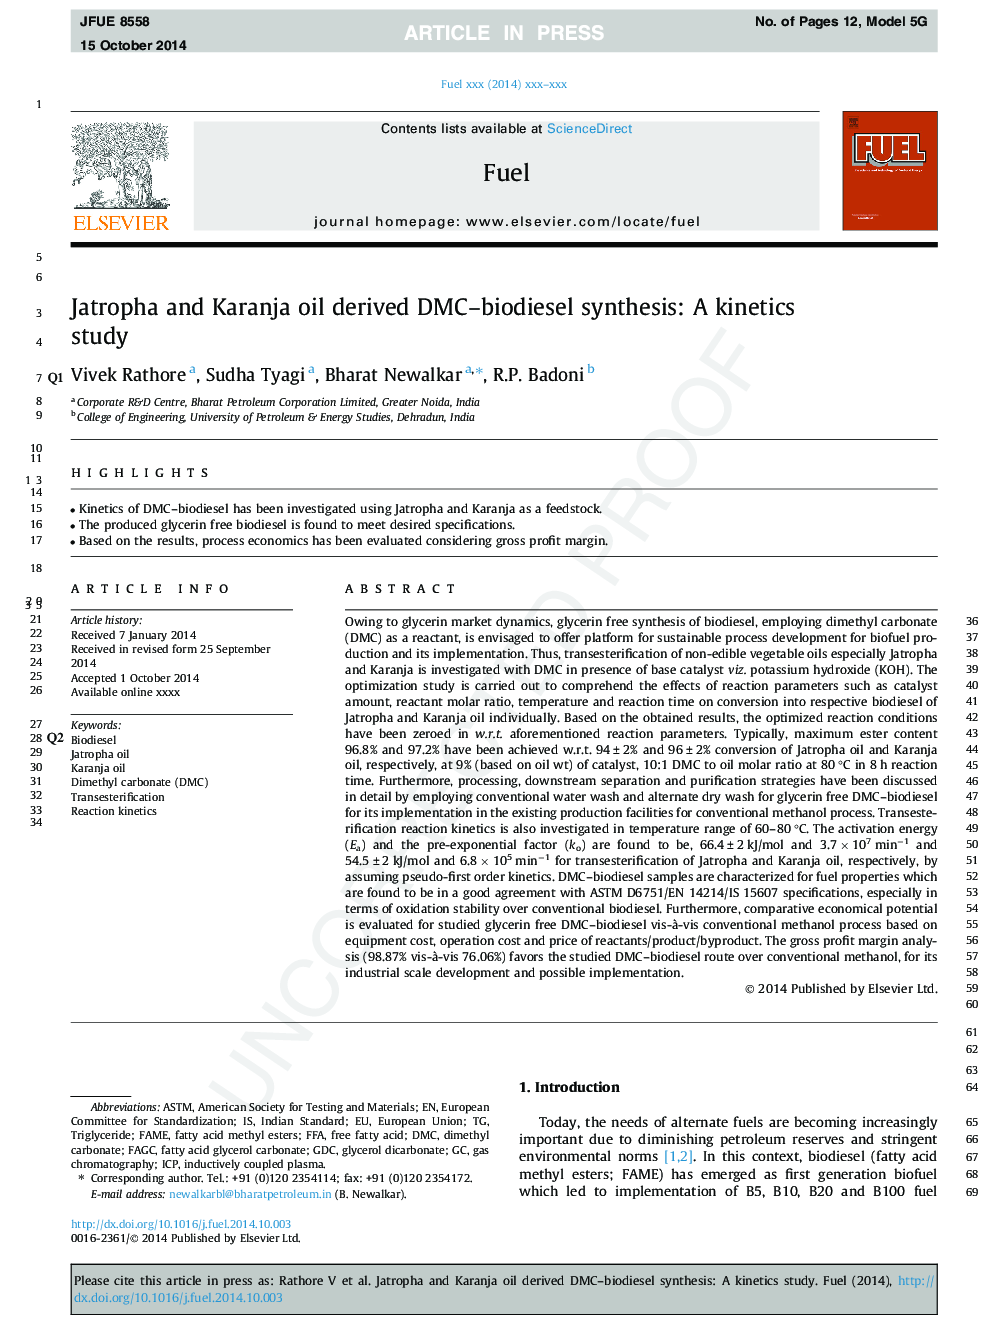 Jatropha and Karanja oil derived DMC-biodiesel synthesis: A kinetics study